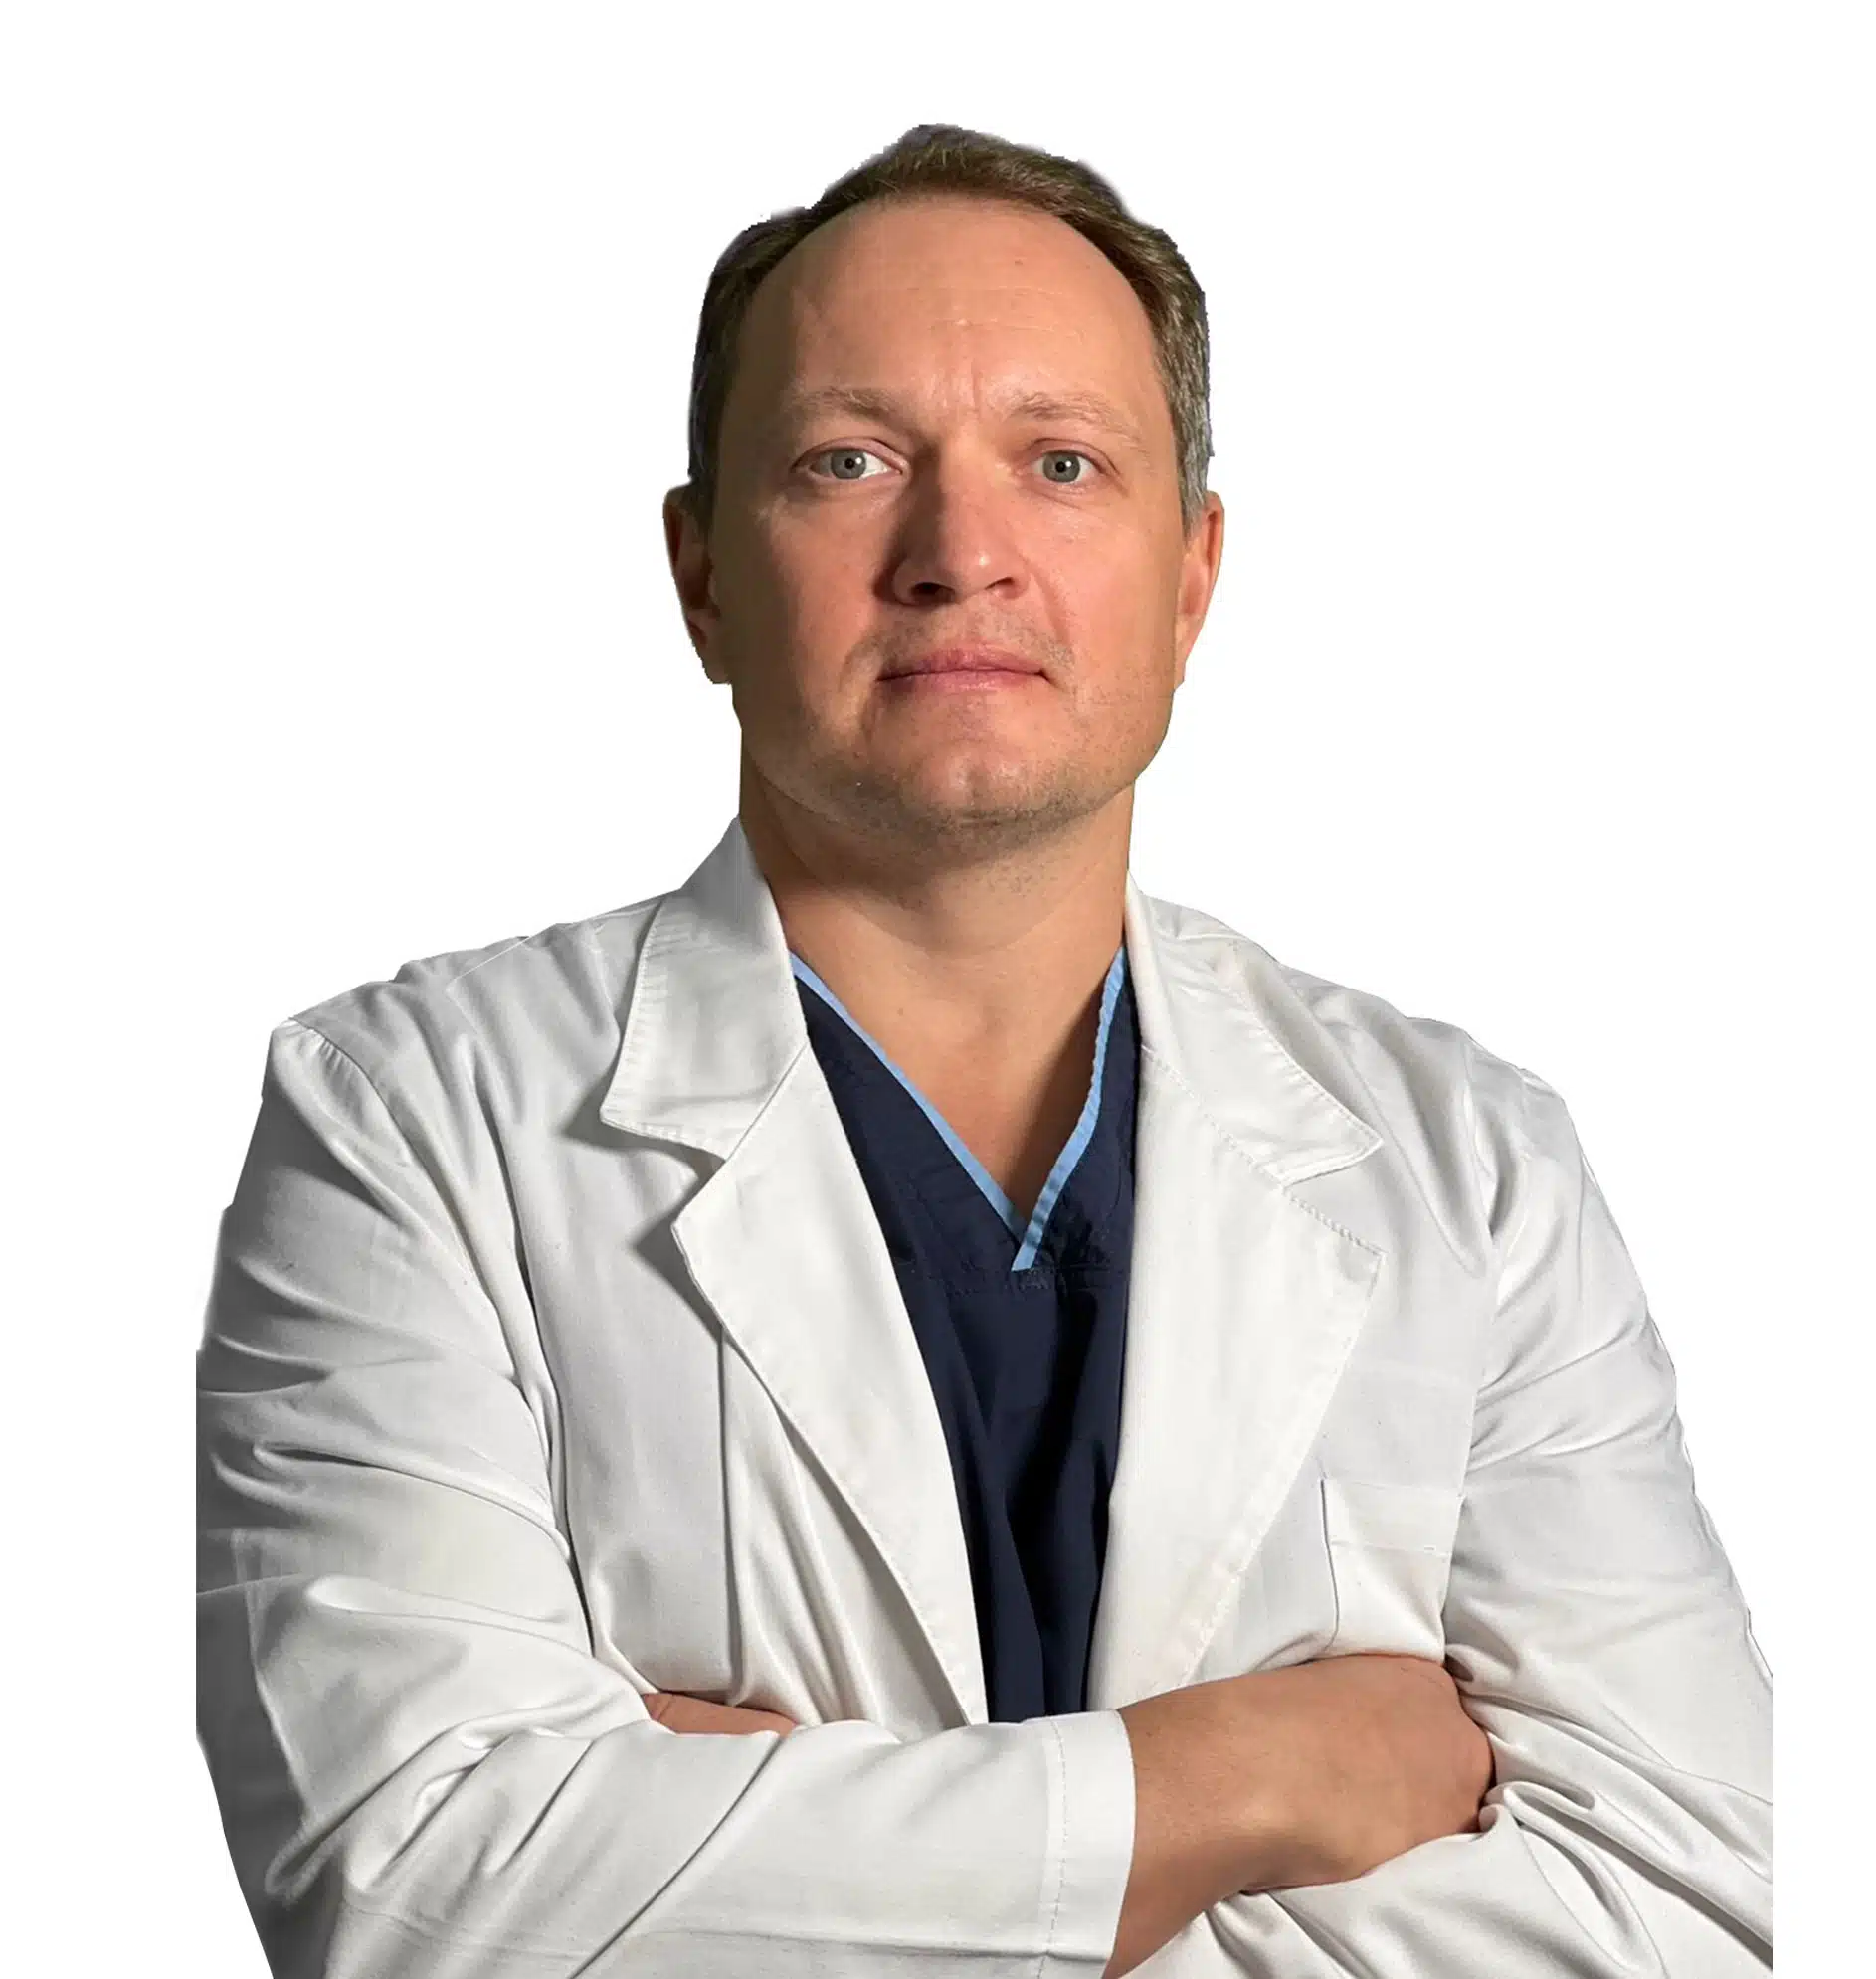 dr-aleksandr-urologist-andrologist-dubai